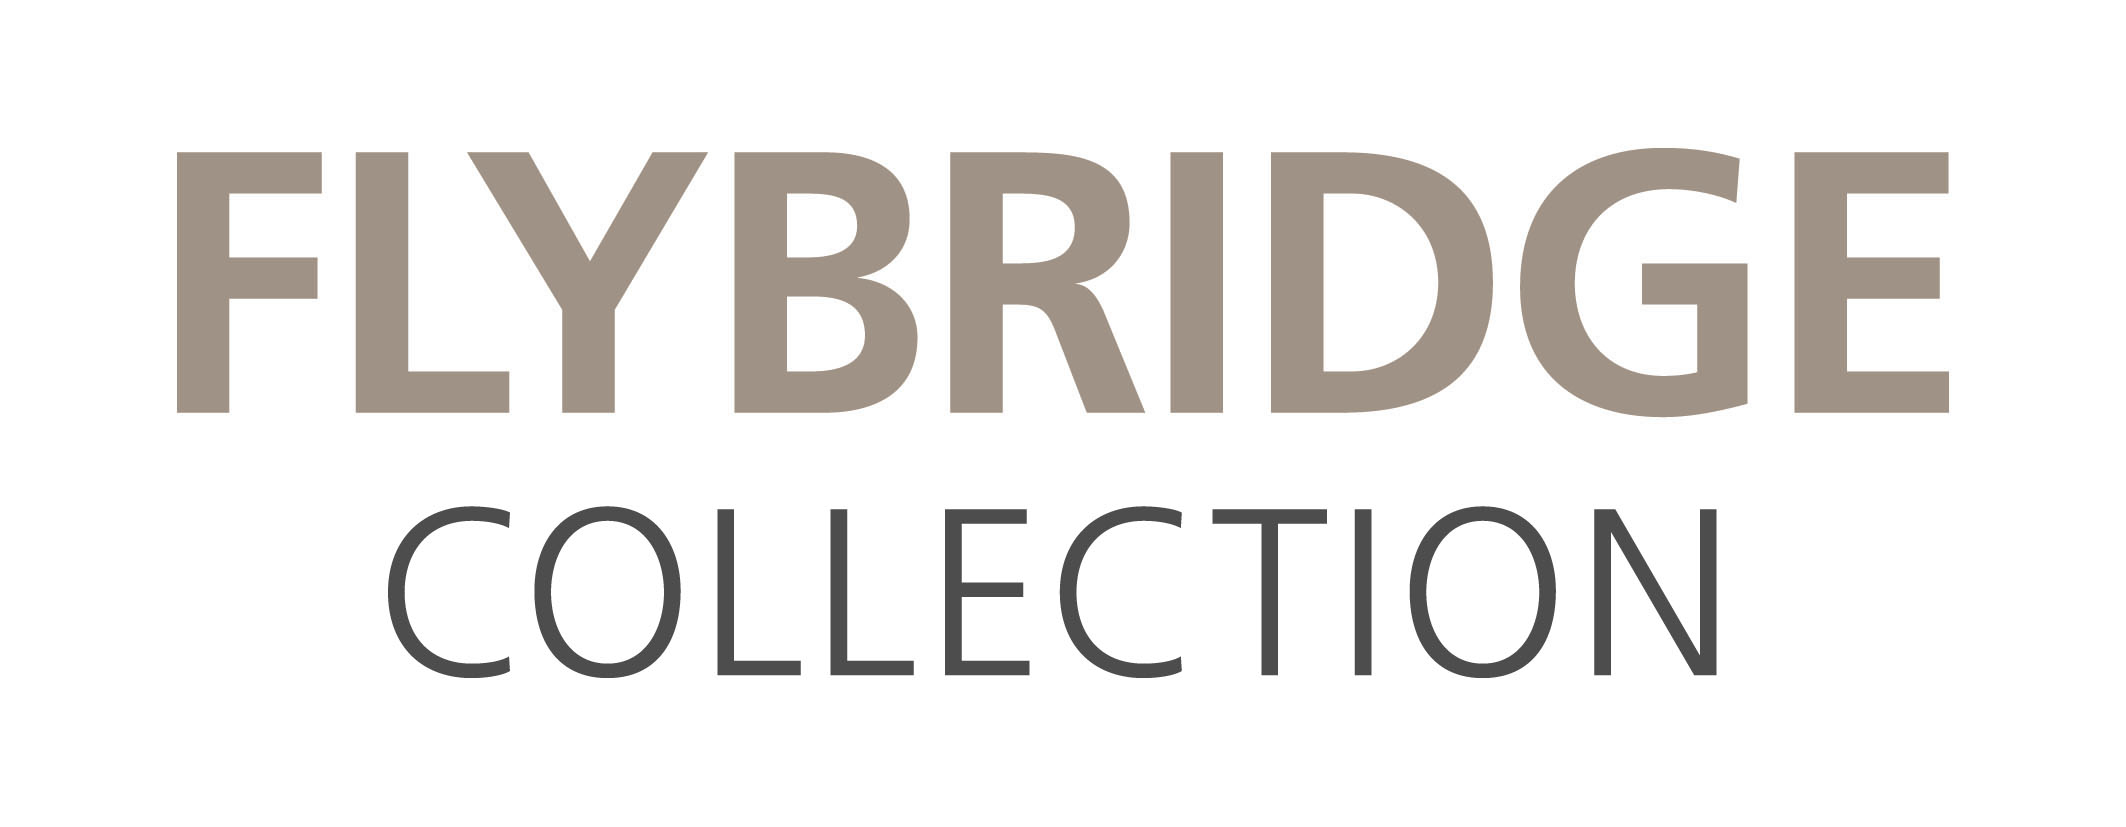 Flybridge Collection